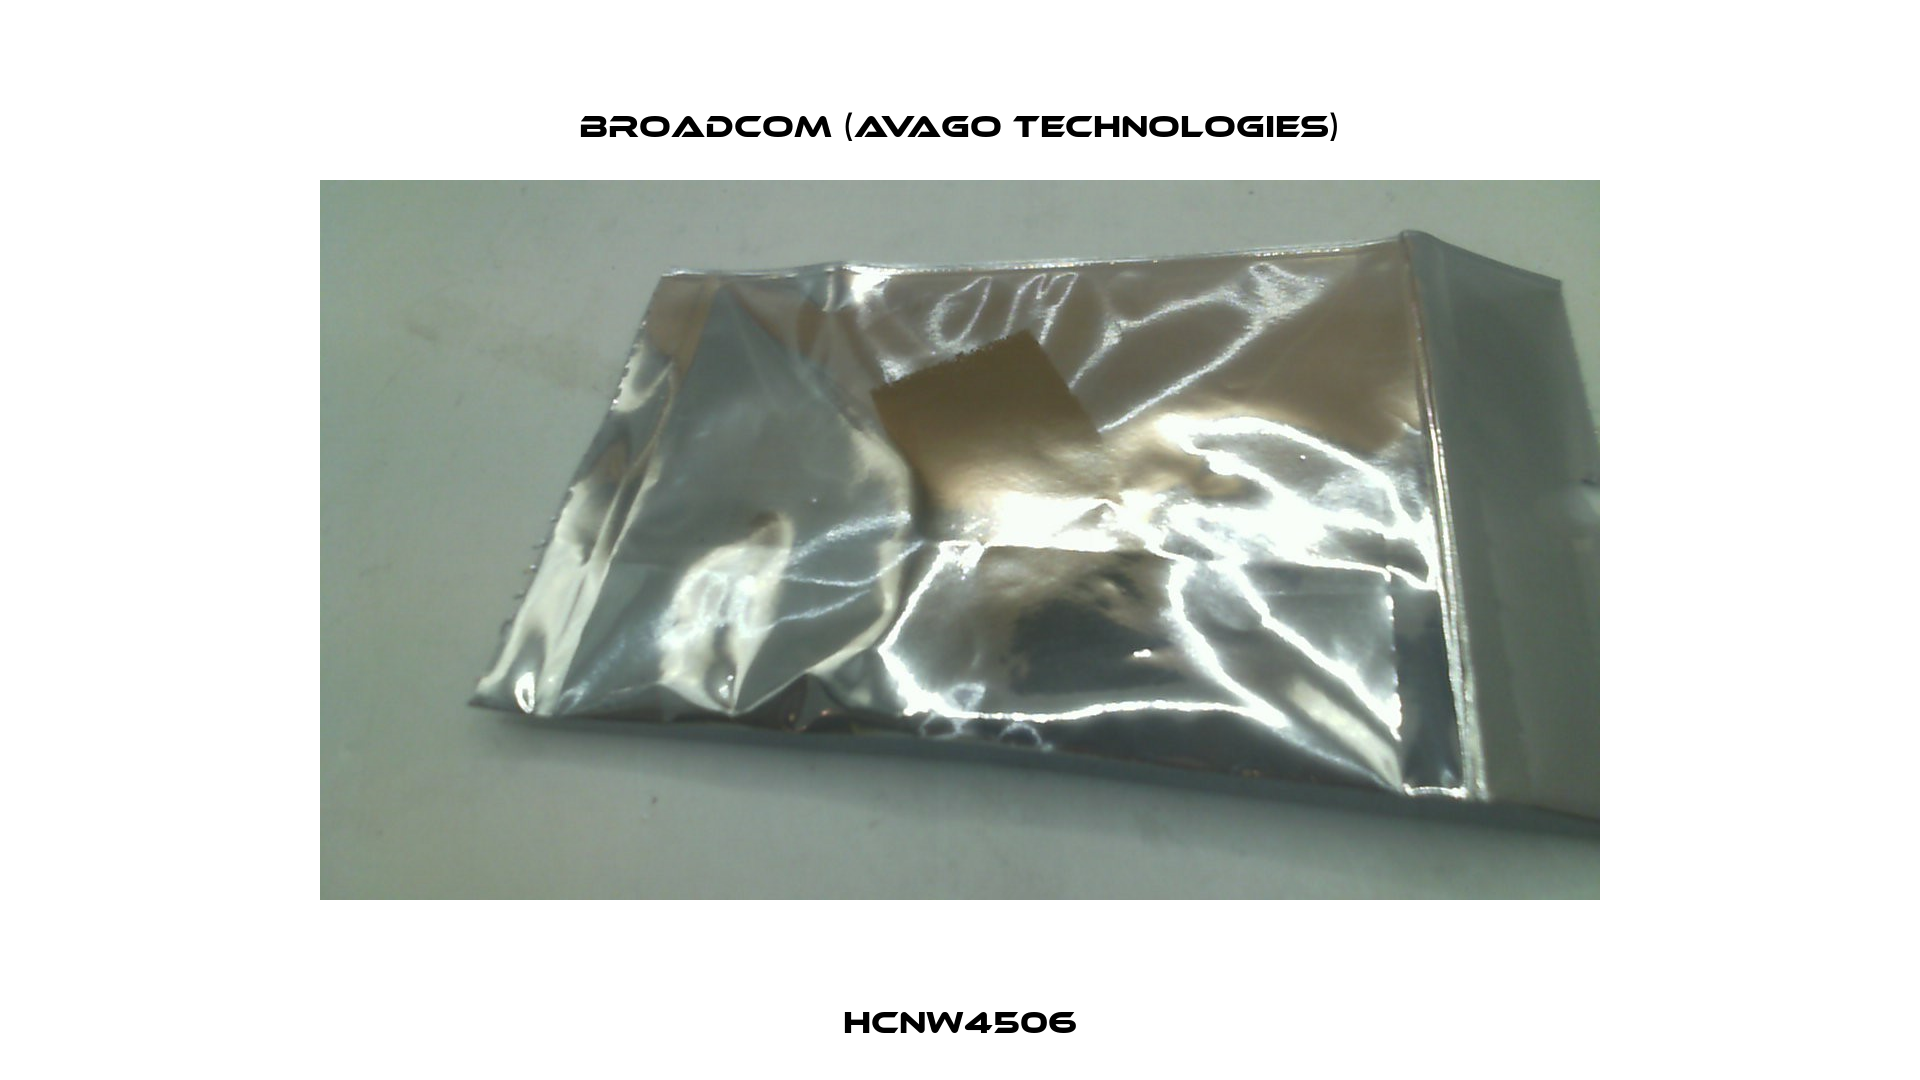 HCNW4506 Broadcom (Avago Technologies)